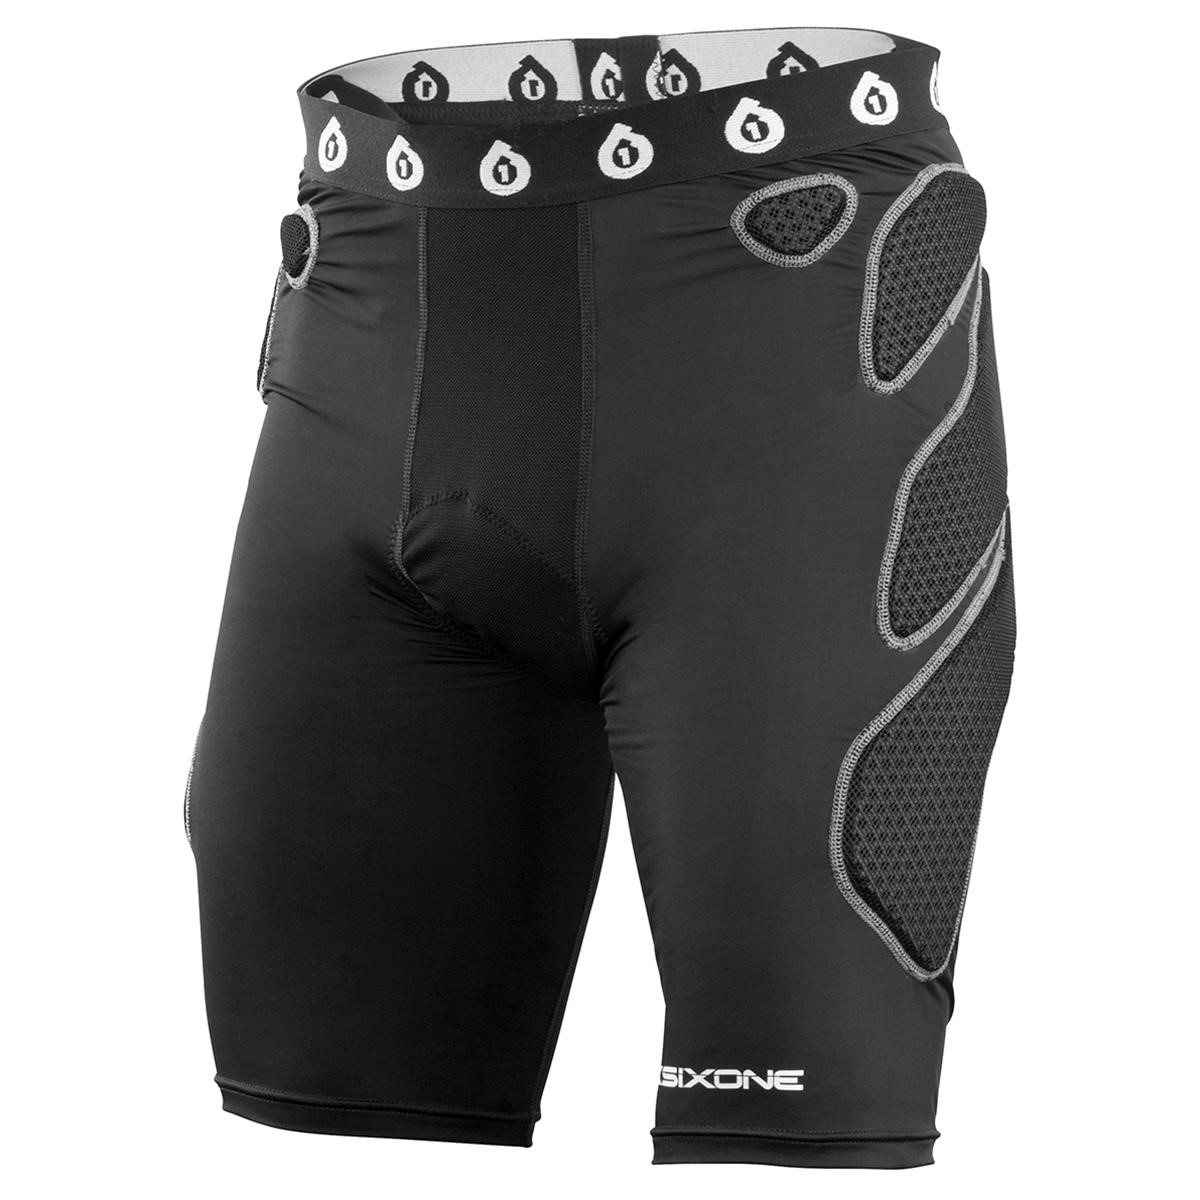 SixSixOne Sous-Shorts de Protection Exo II Chamois - Black